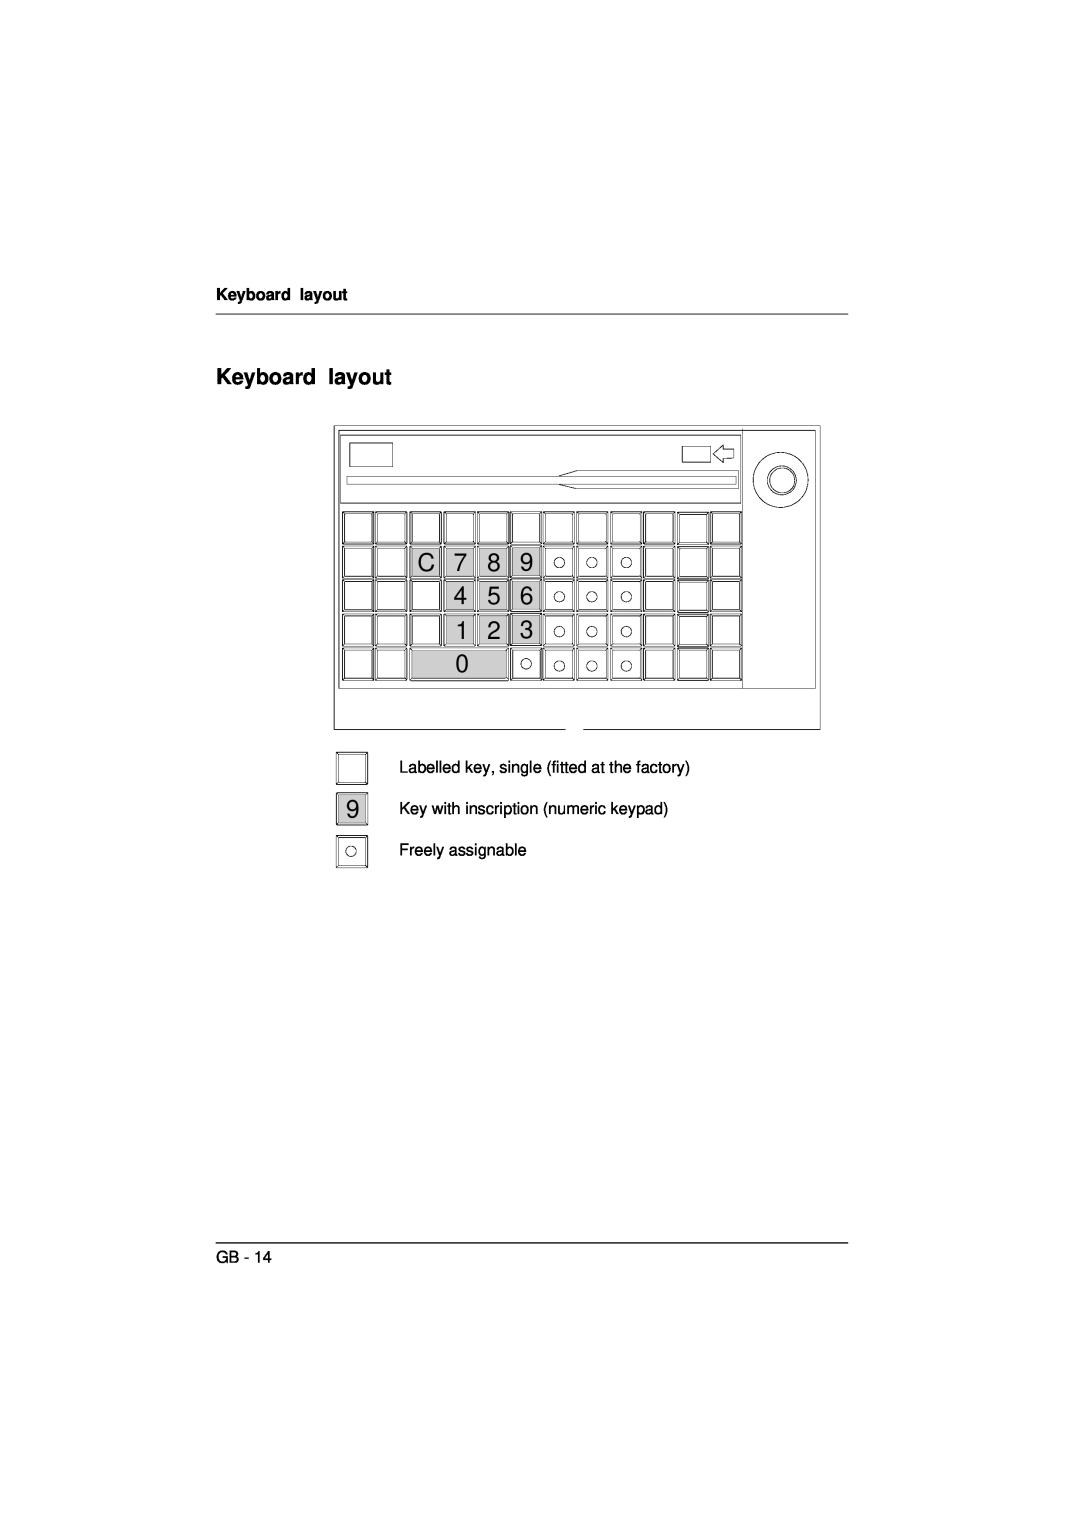 Microsoft TA61 manual Keyboard layout, C 7 8 9 4 5 6 1 2 3 